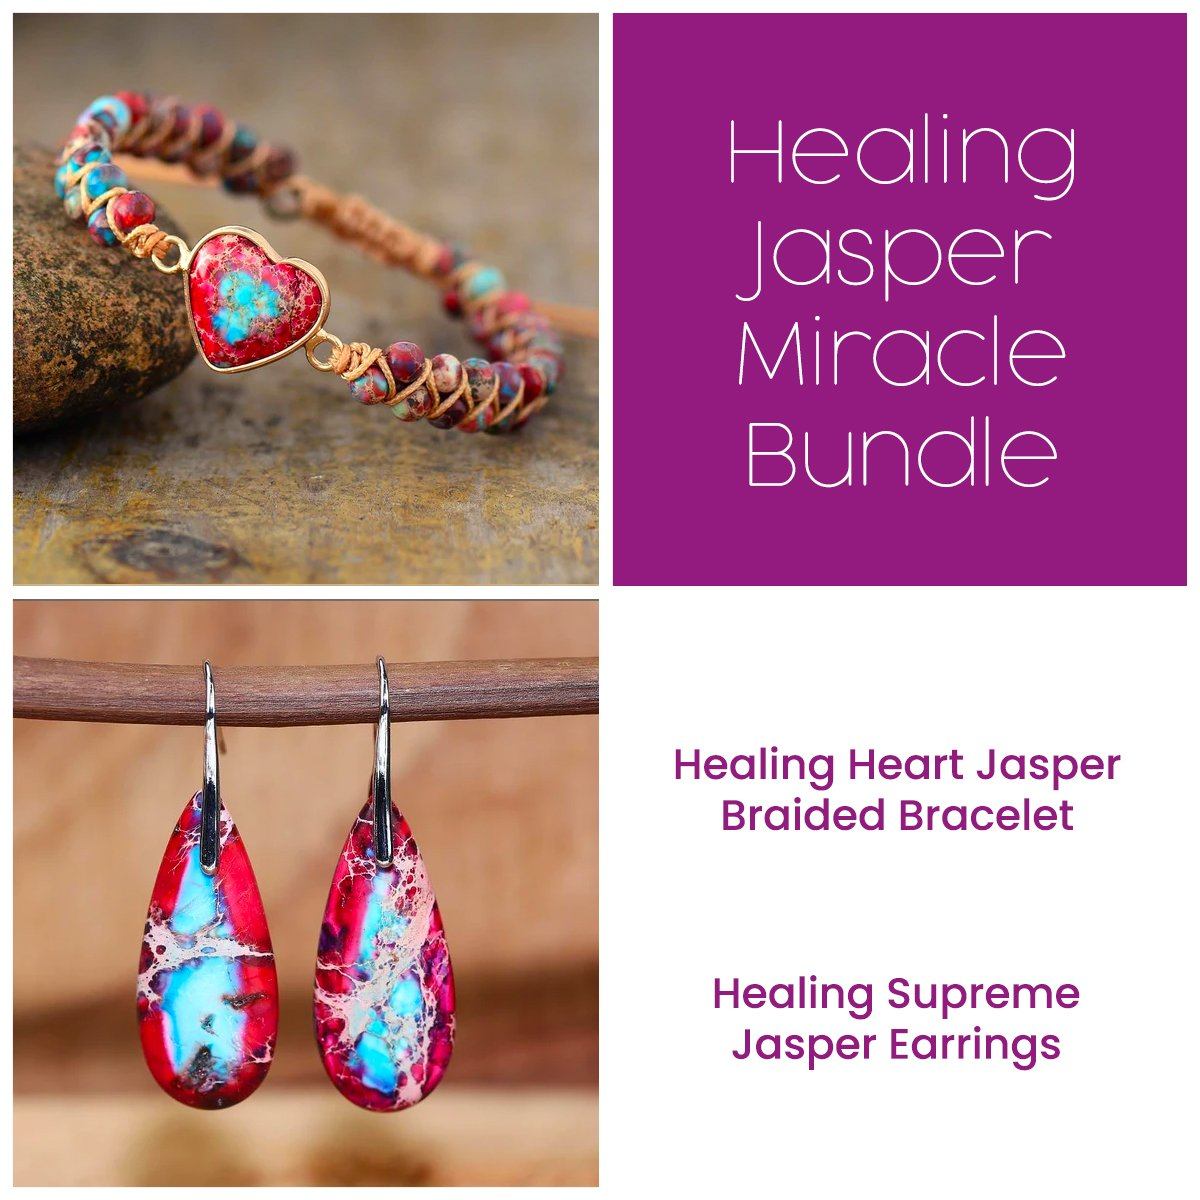 Healing Jasper Miracle Bundle